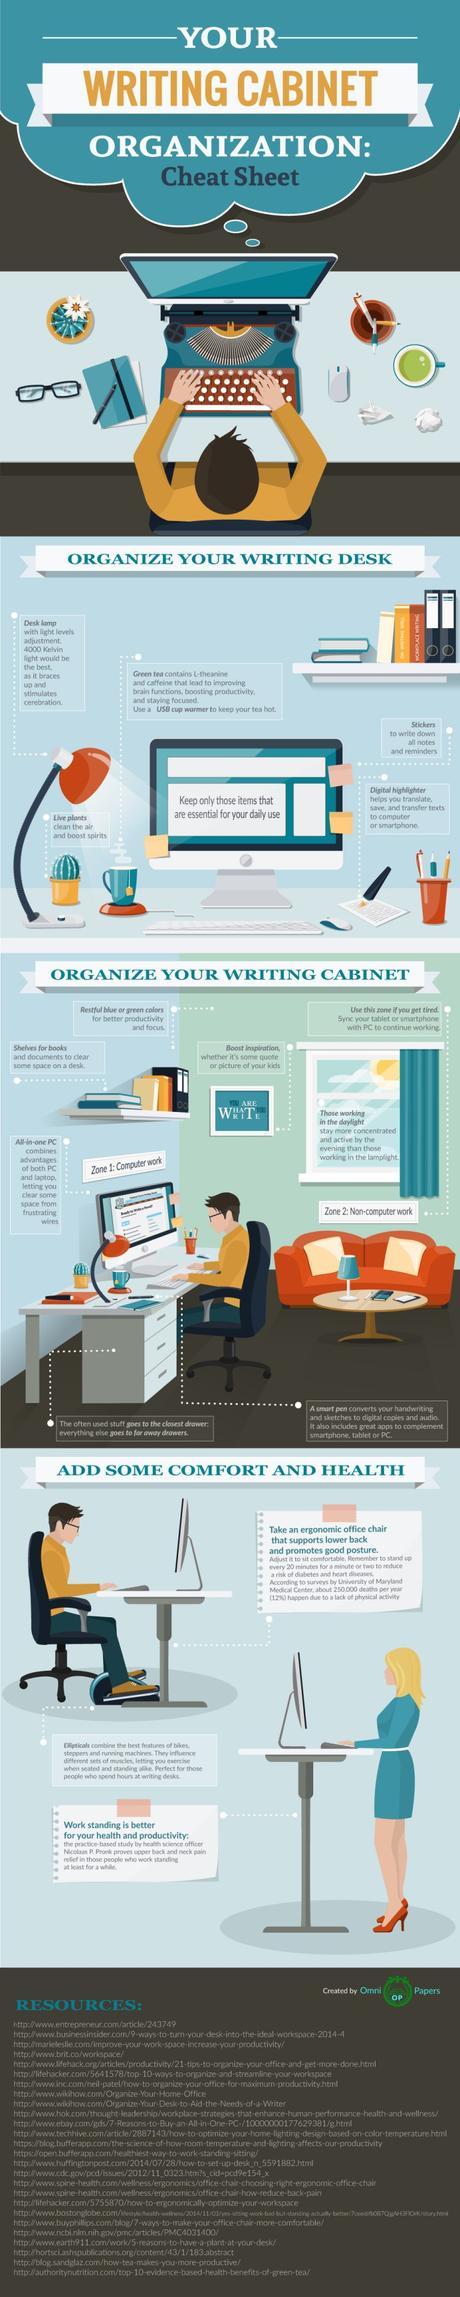 writing-cabinet-organization